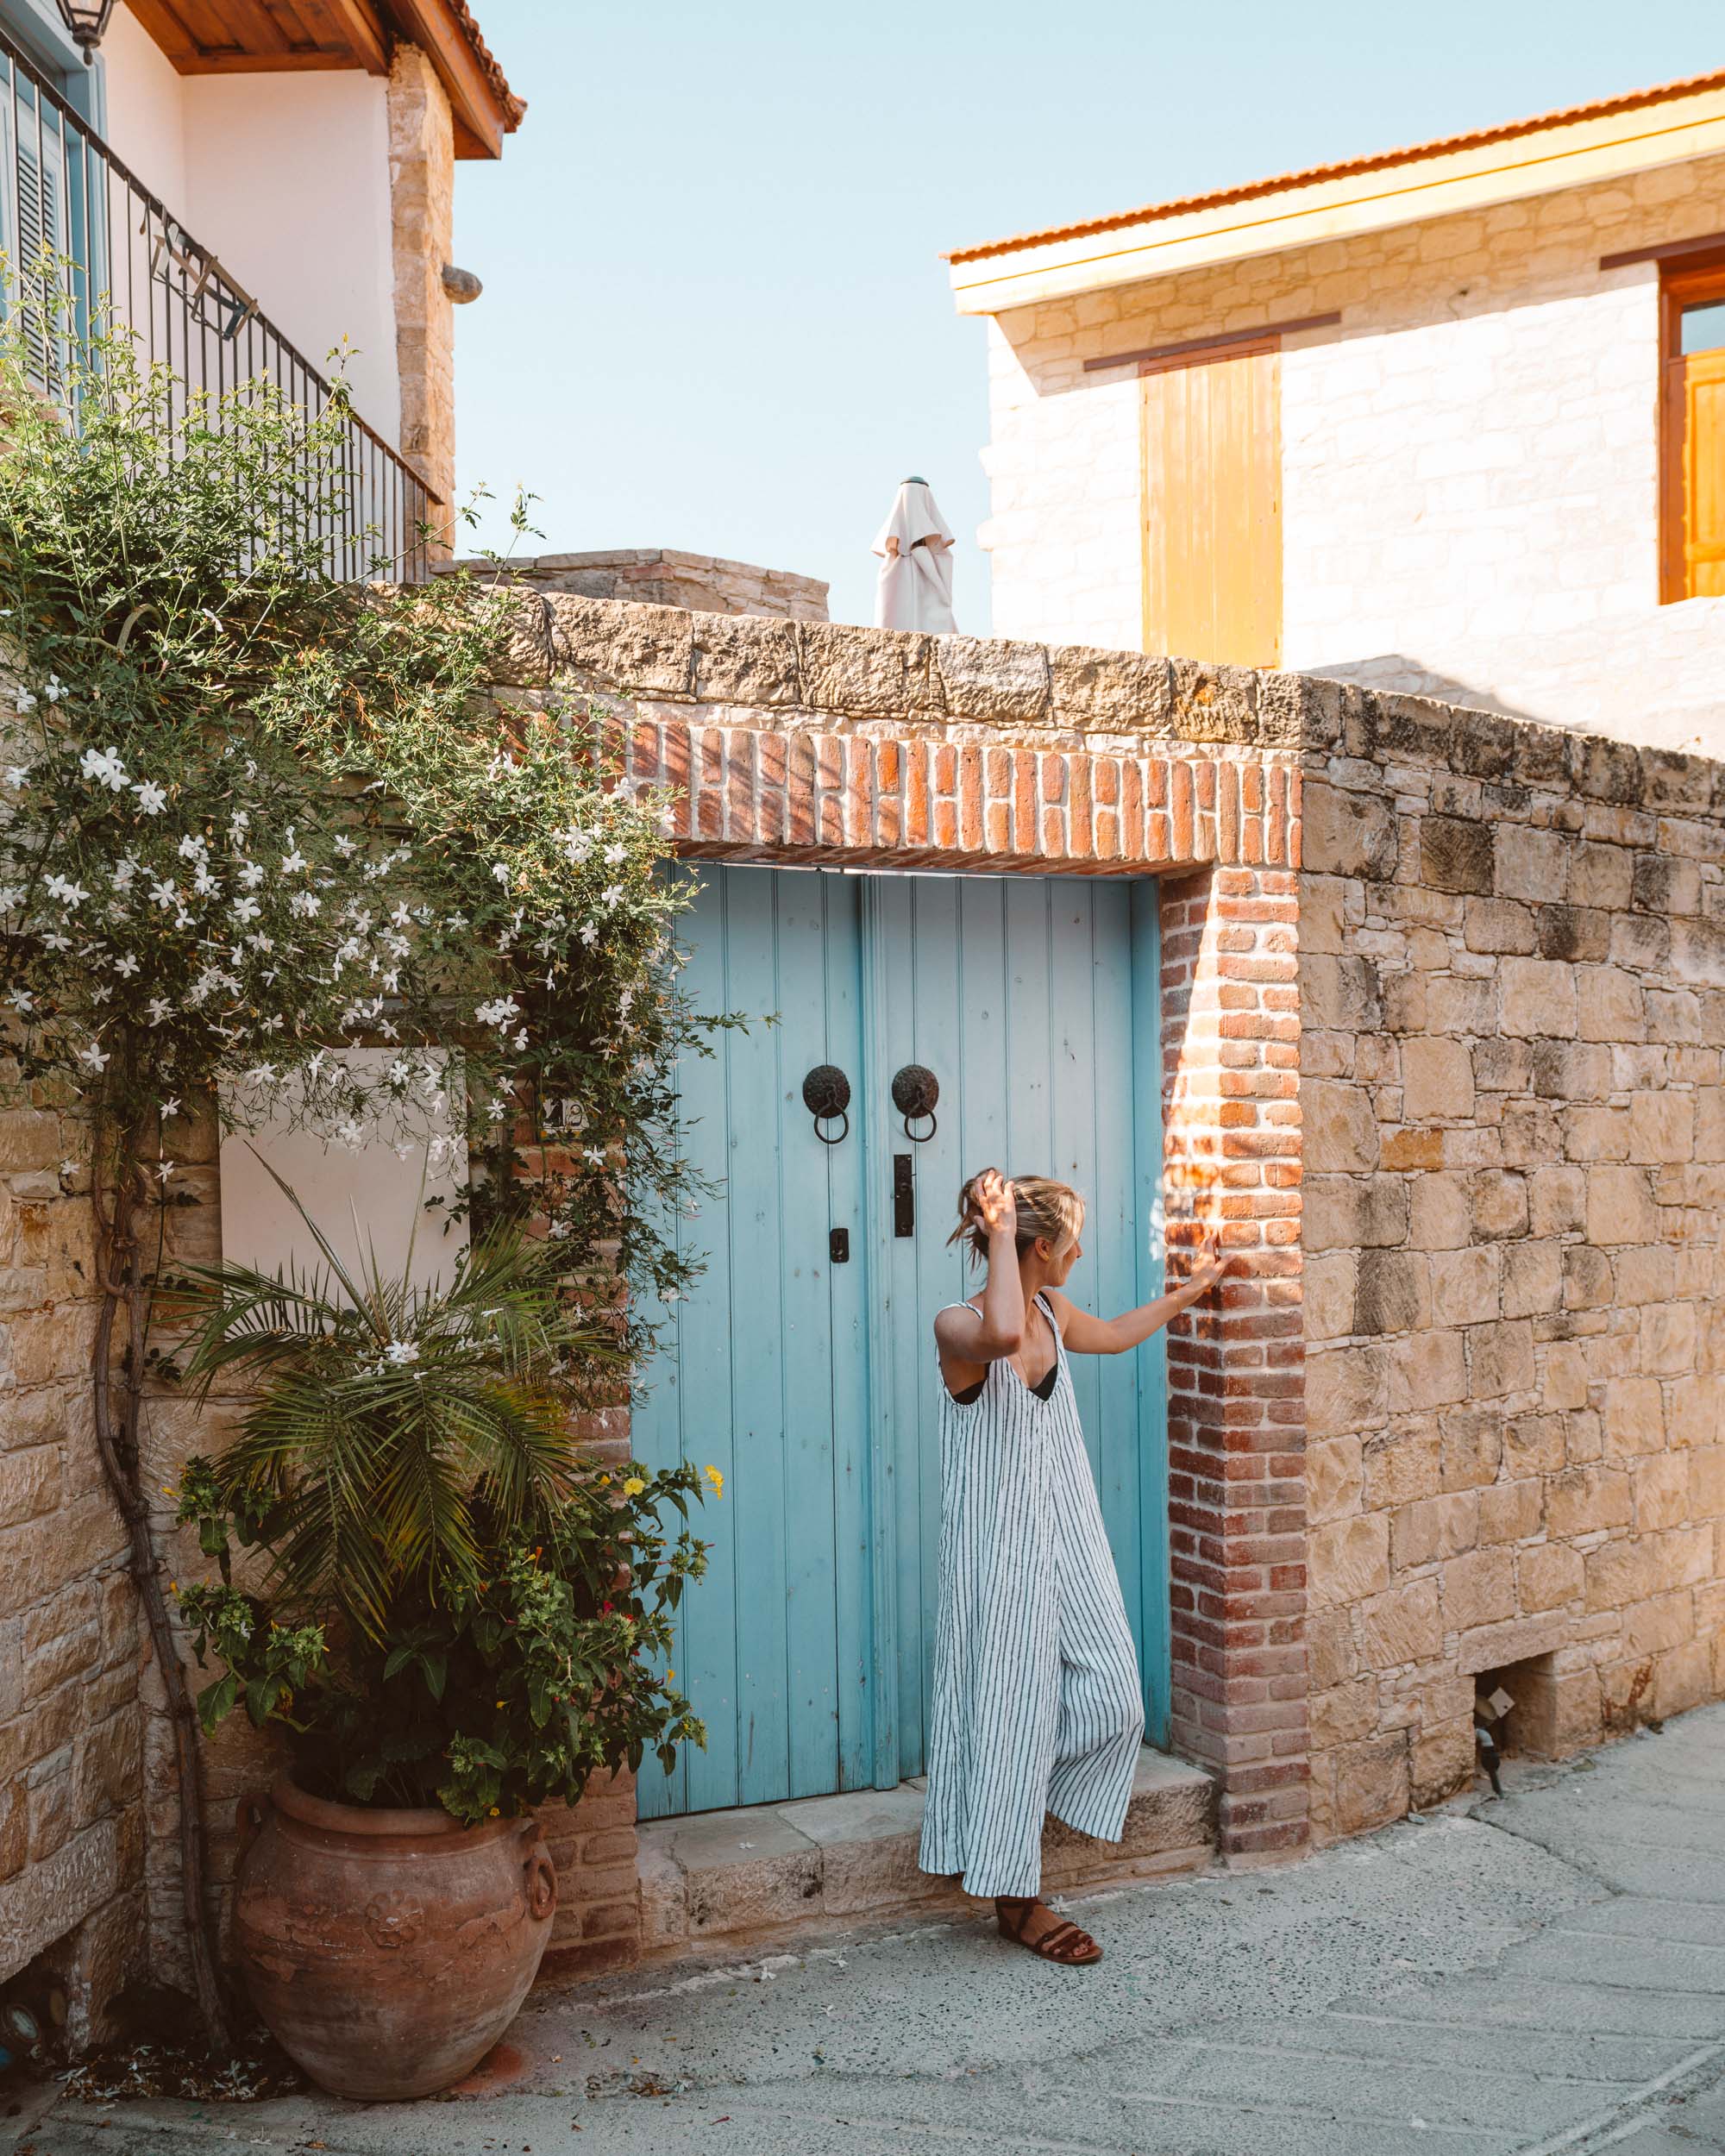 Cypriot doors in Omodos Village Cyprus via @finduslost